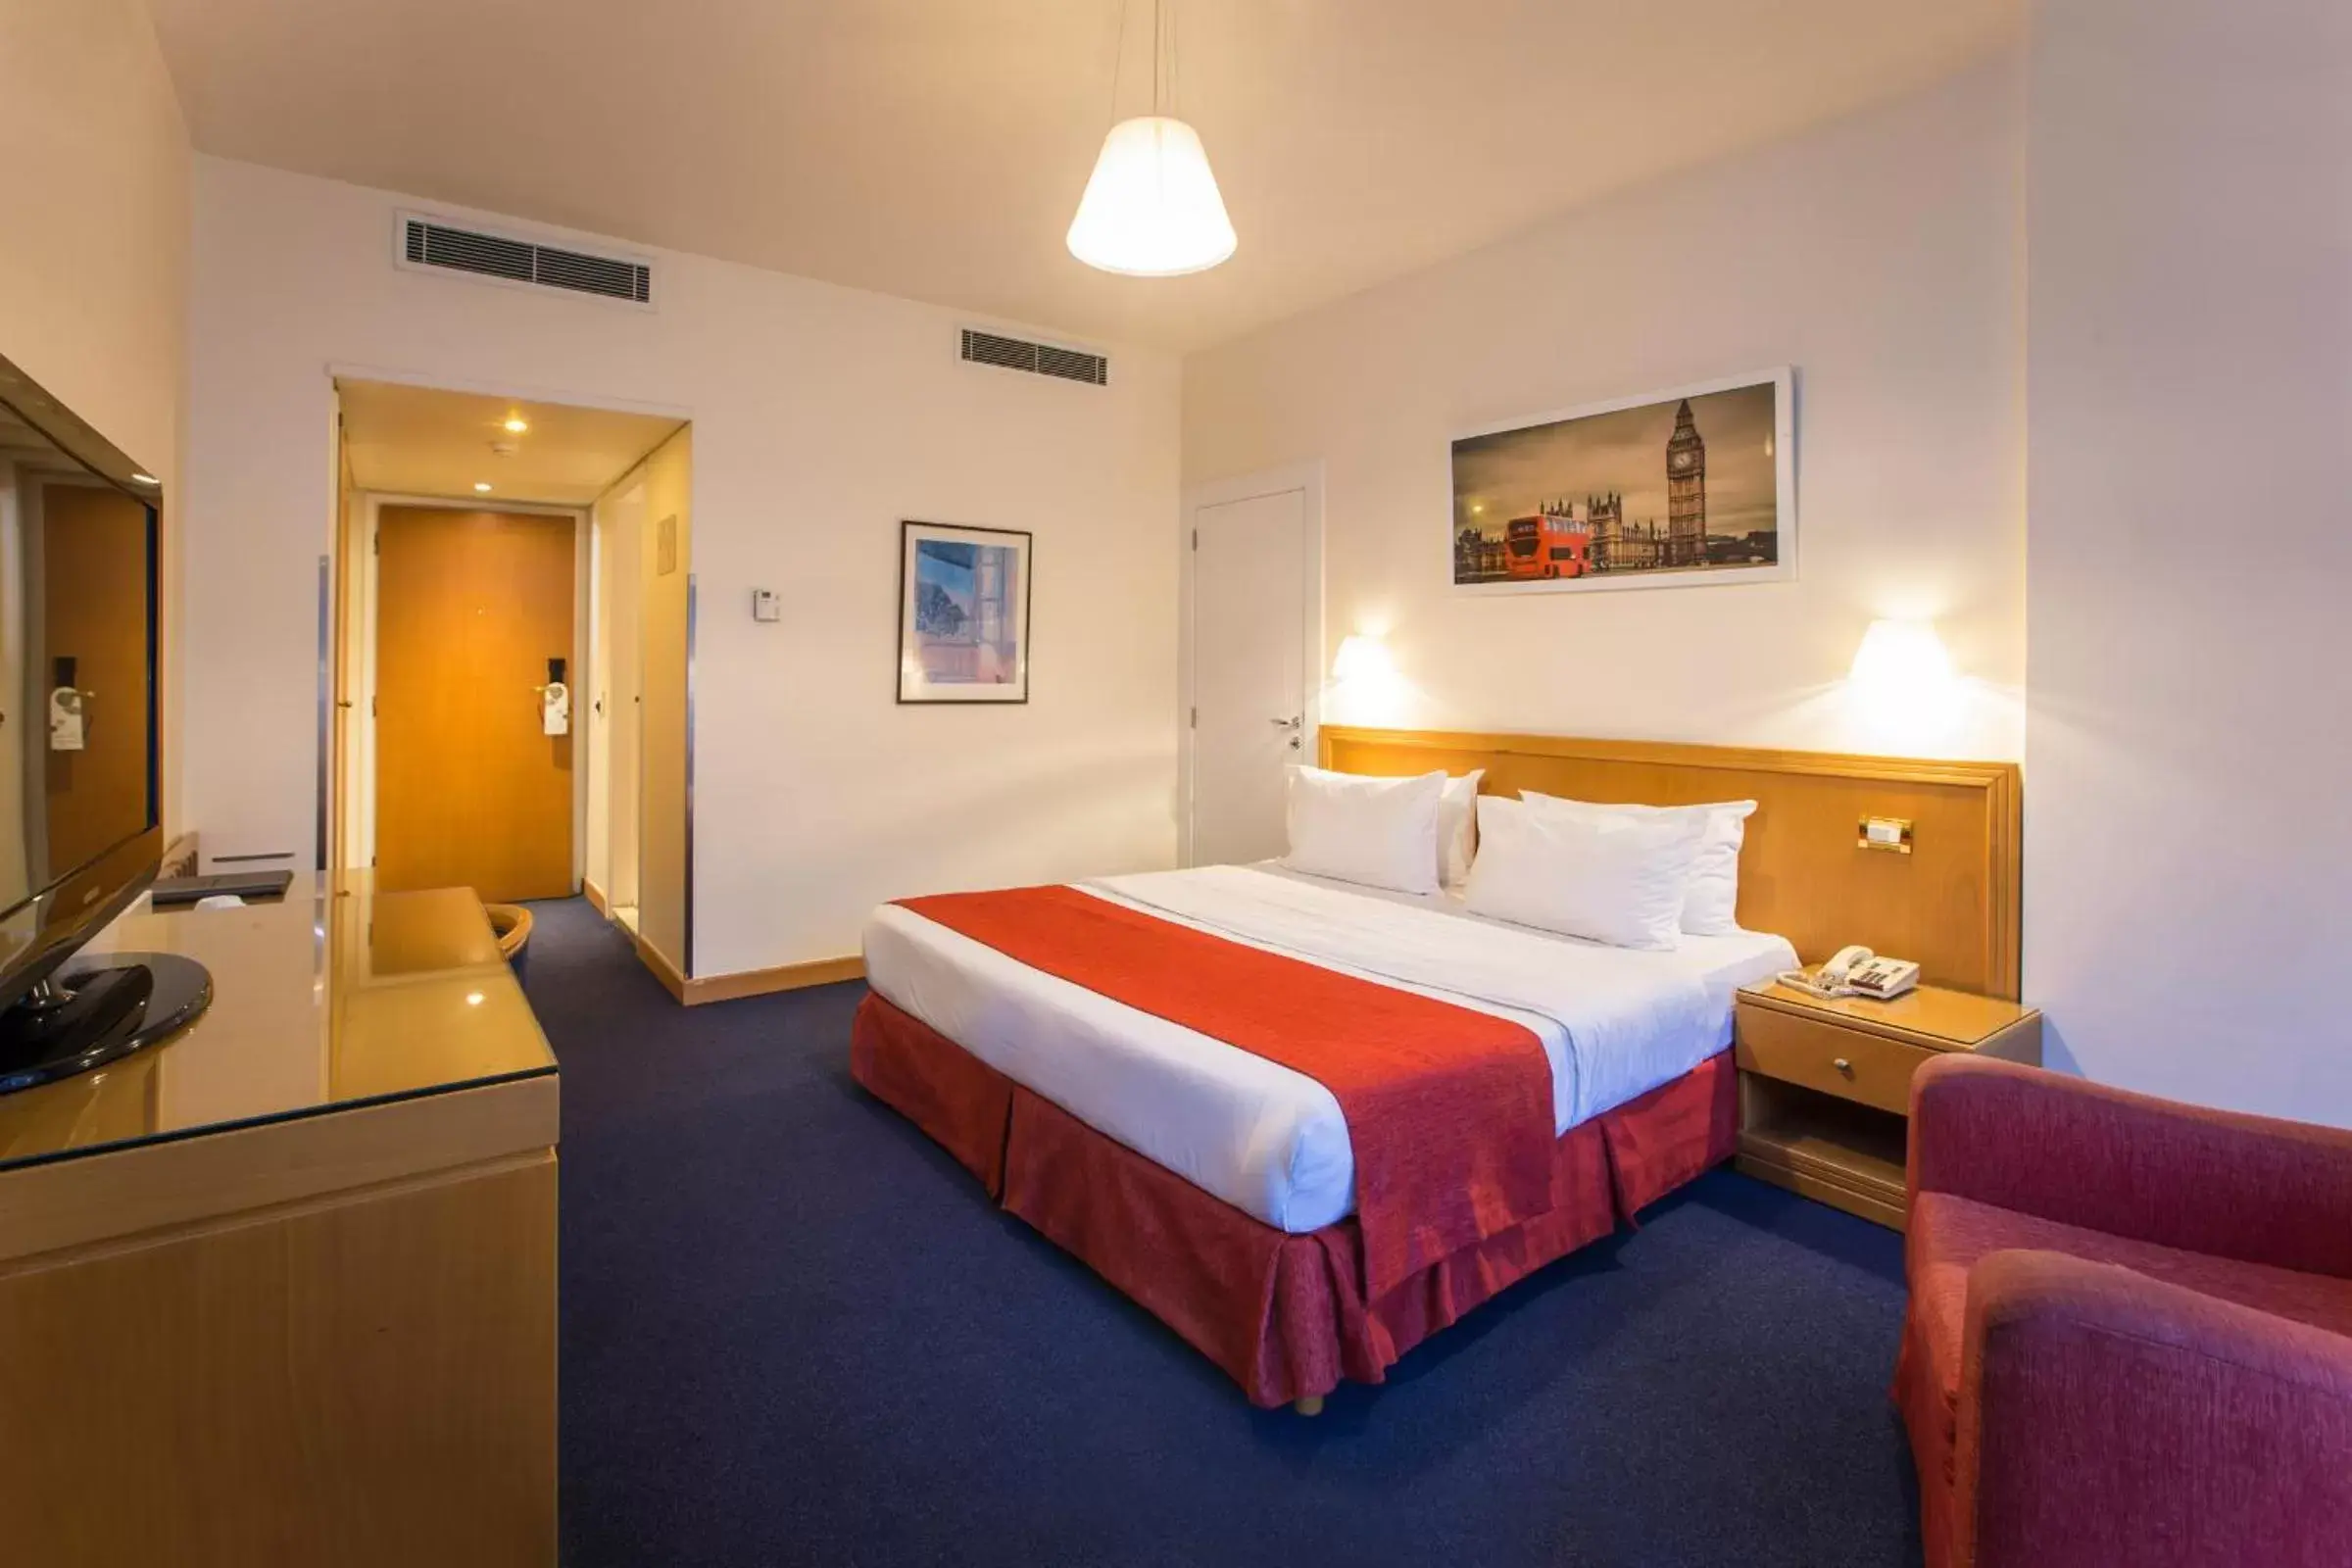 bunk bed, Room Photo in Hotel Cavalier